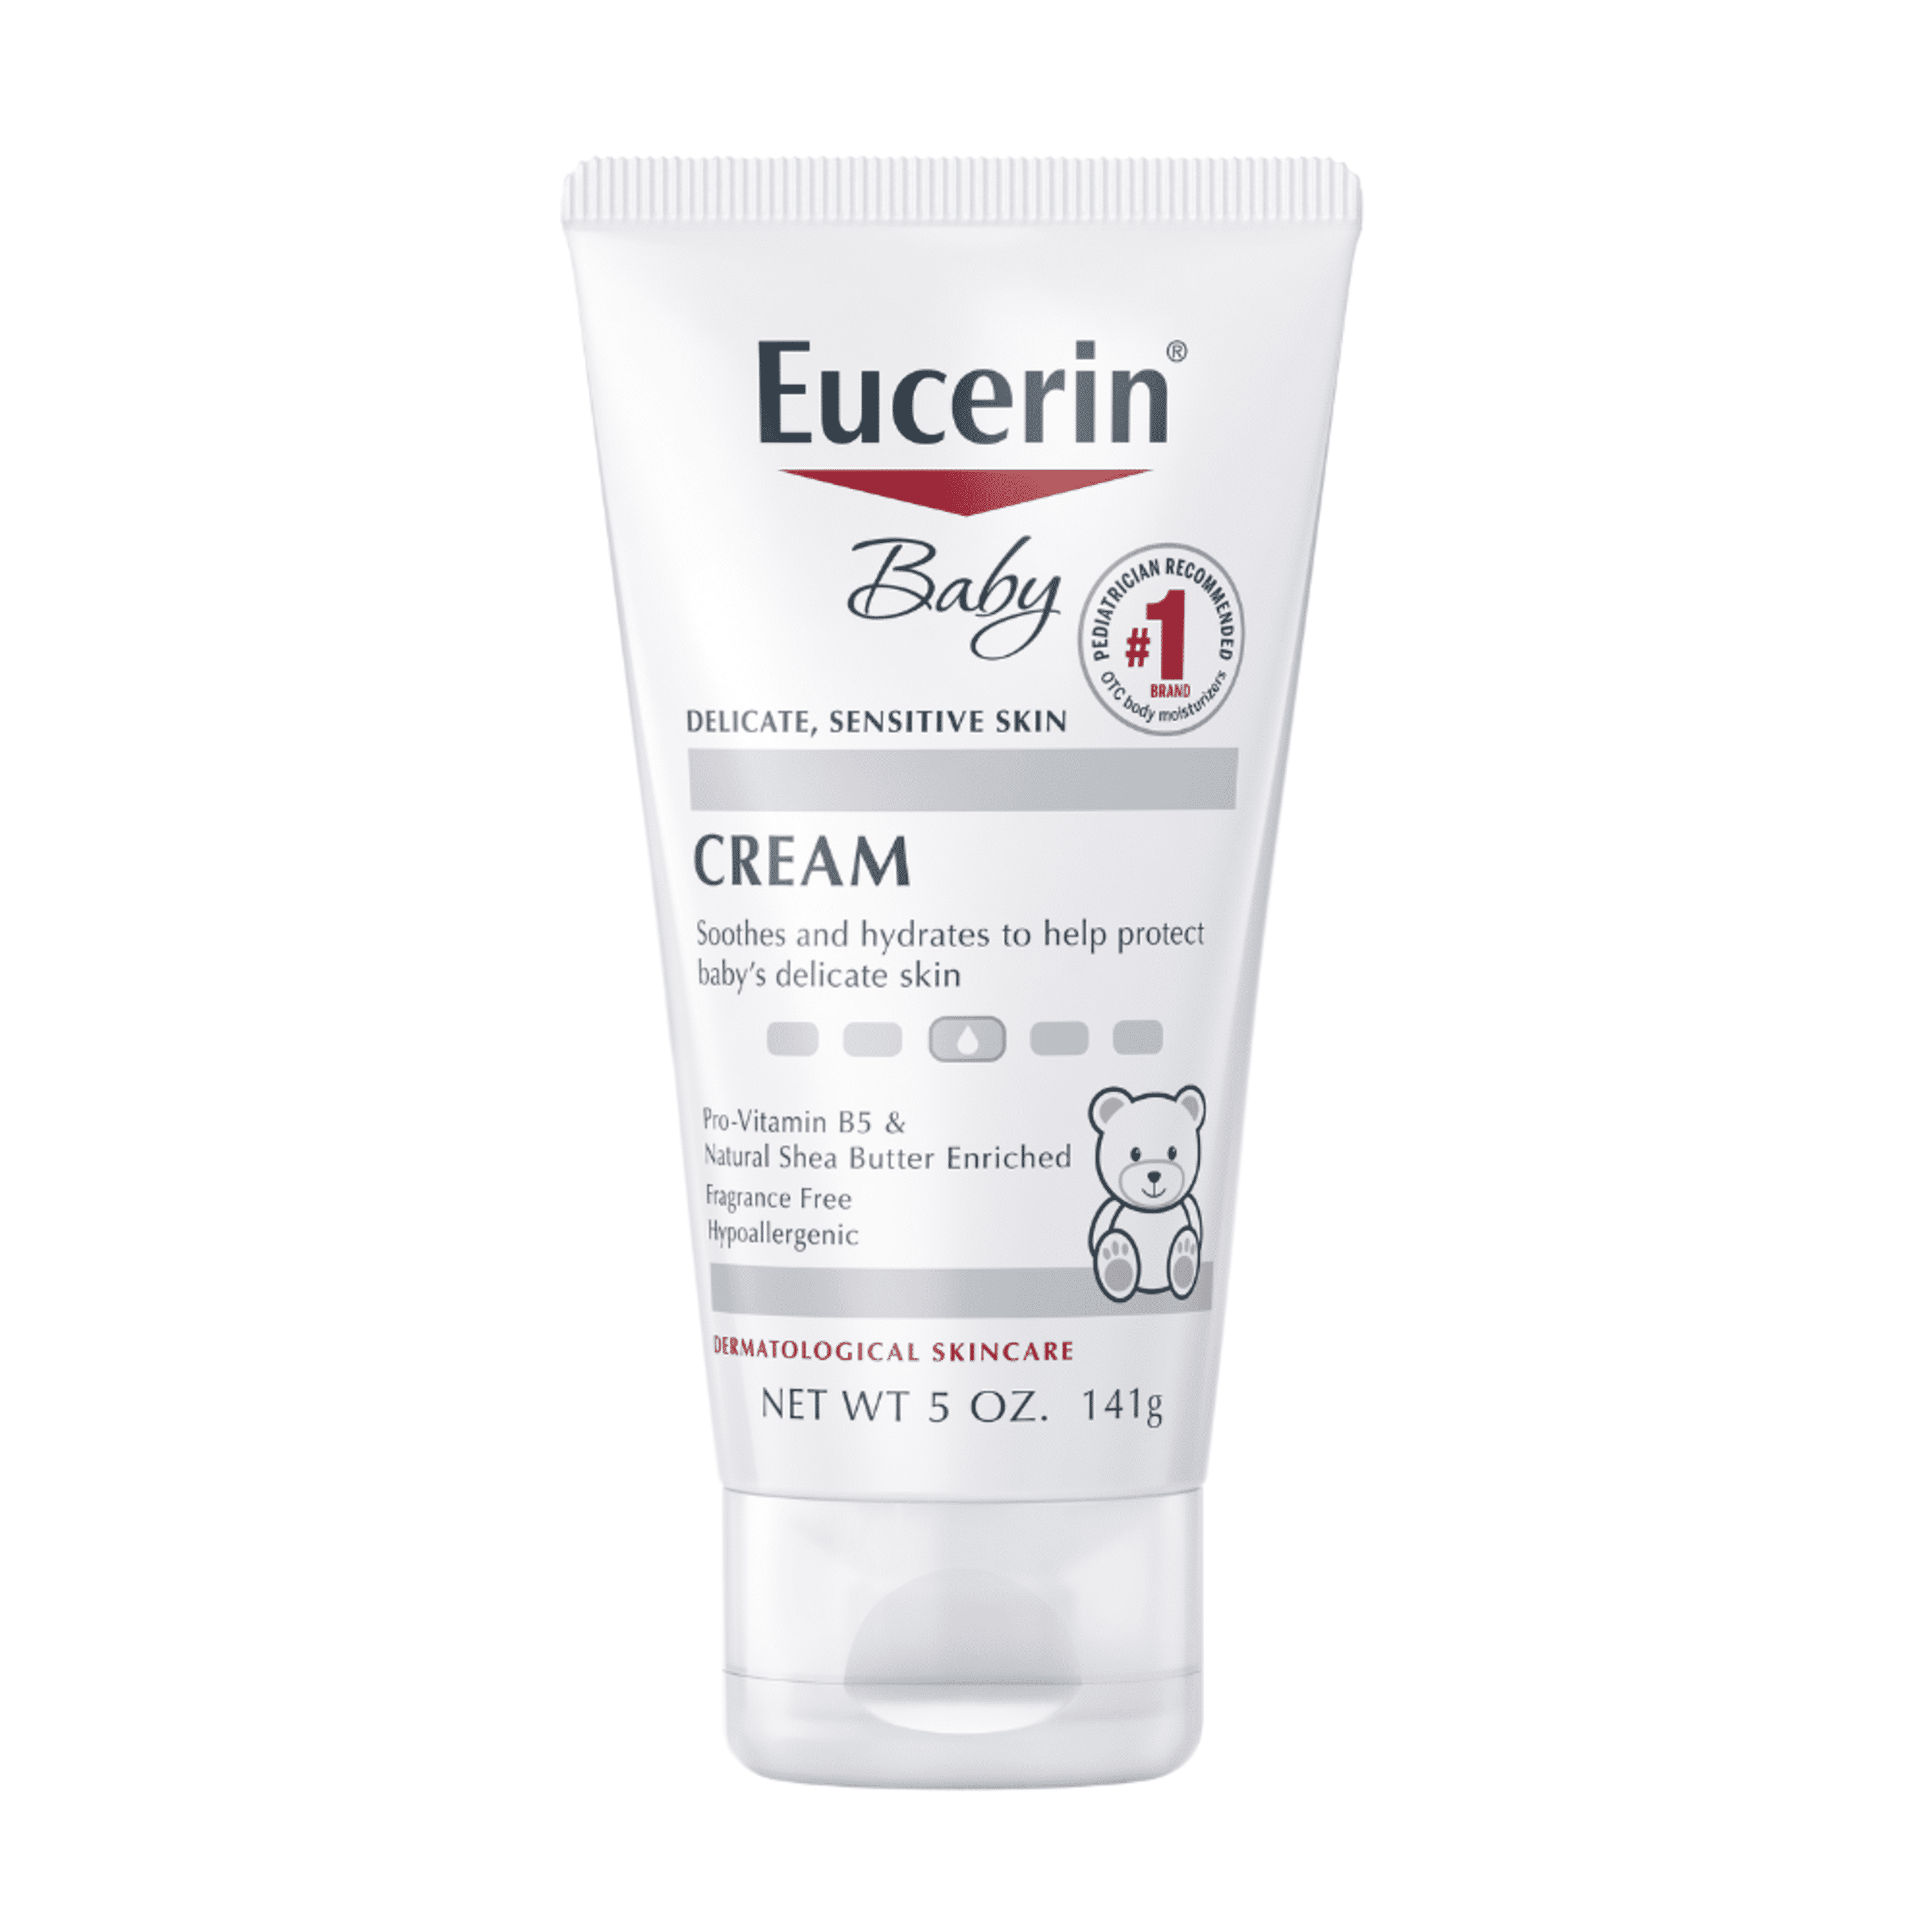 Eucerin Baby Cream, Unscented Baby Creme, 5 oz. - Walmart.com